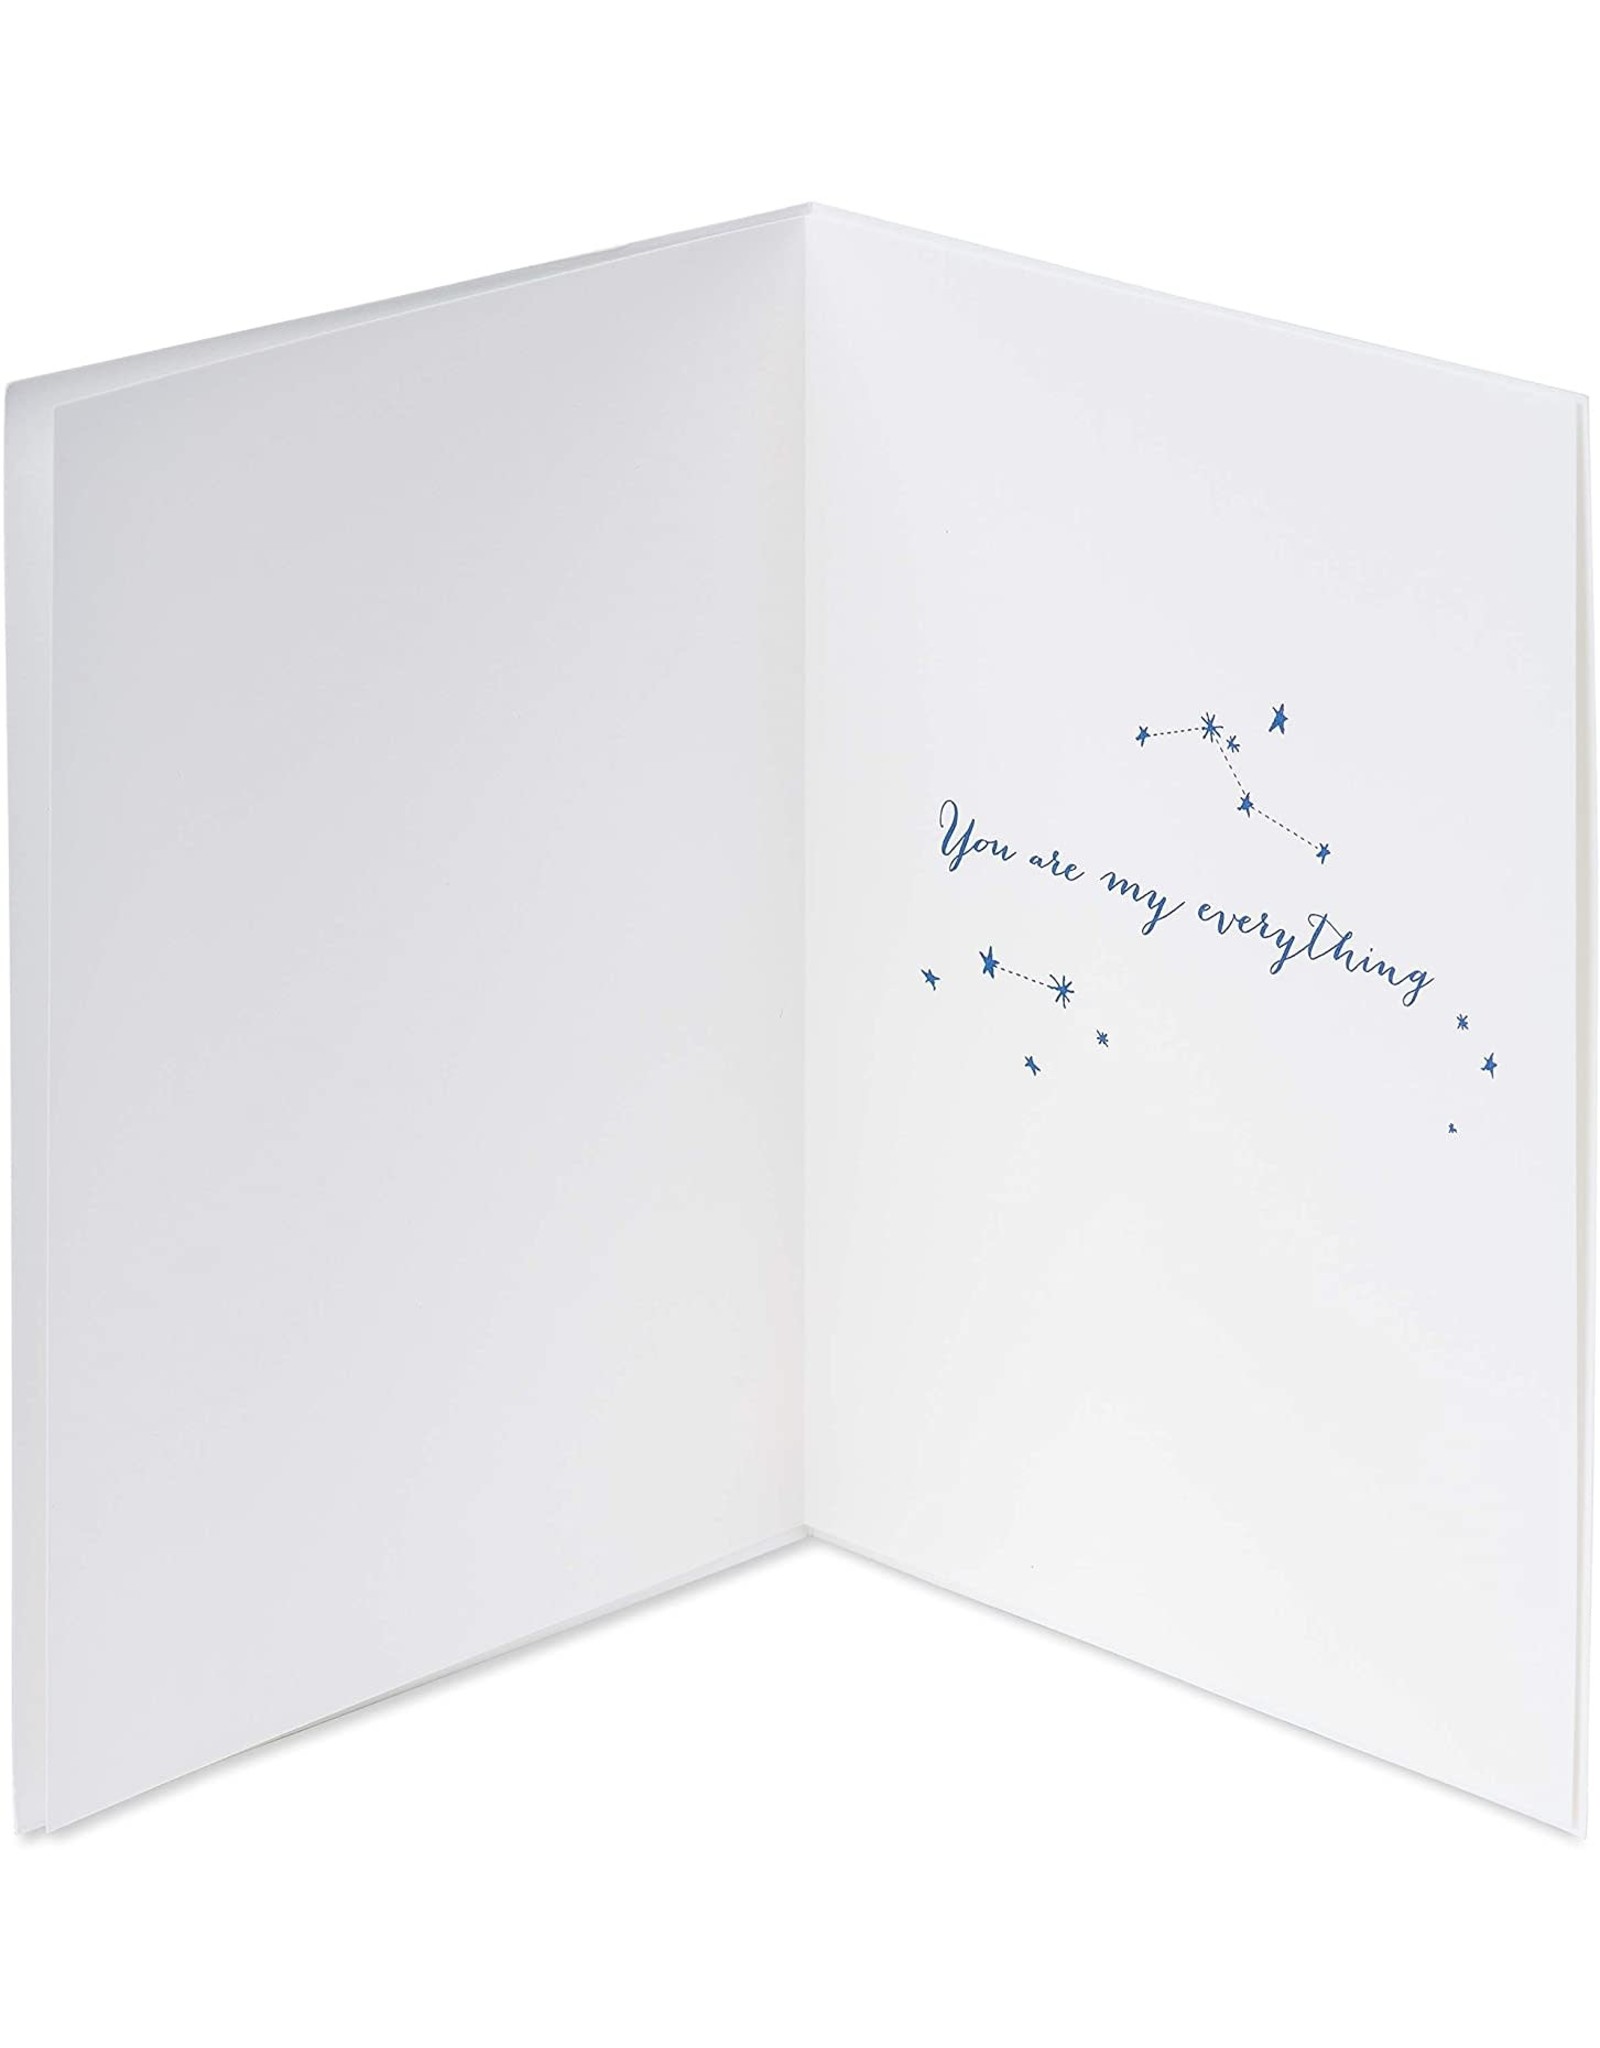 PAPYRUS® Anniversary Card Elegant Star Quote